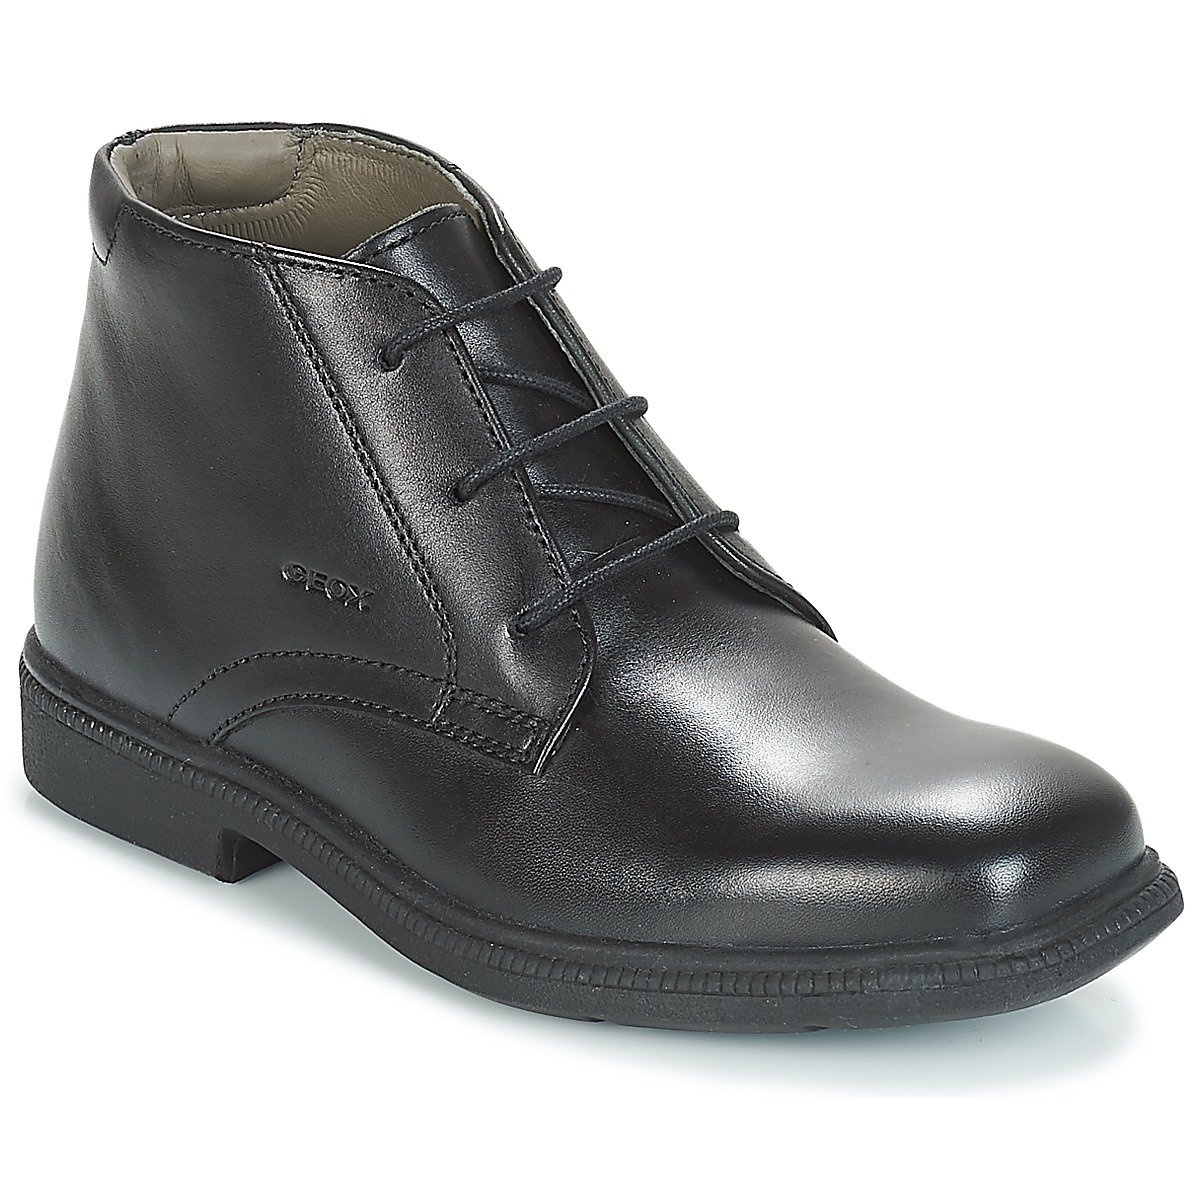 Geox健乐士男孩鞋子靴子黑色J74D1A00043C9999J原装正品方头秋冬